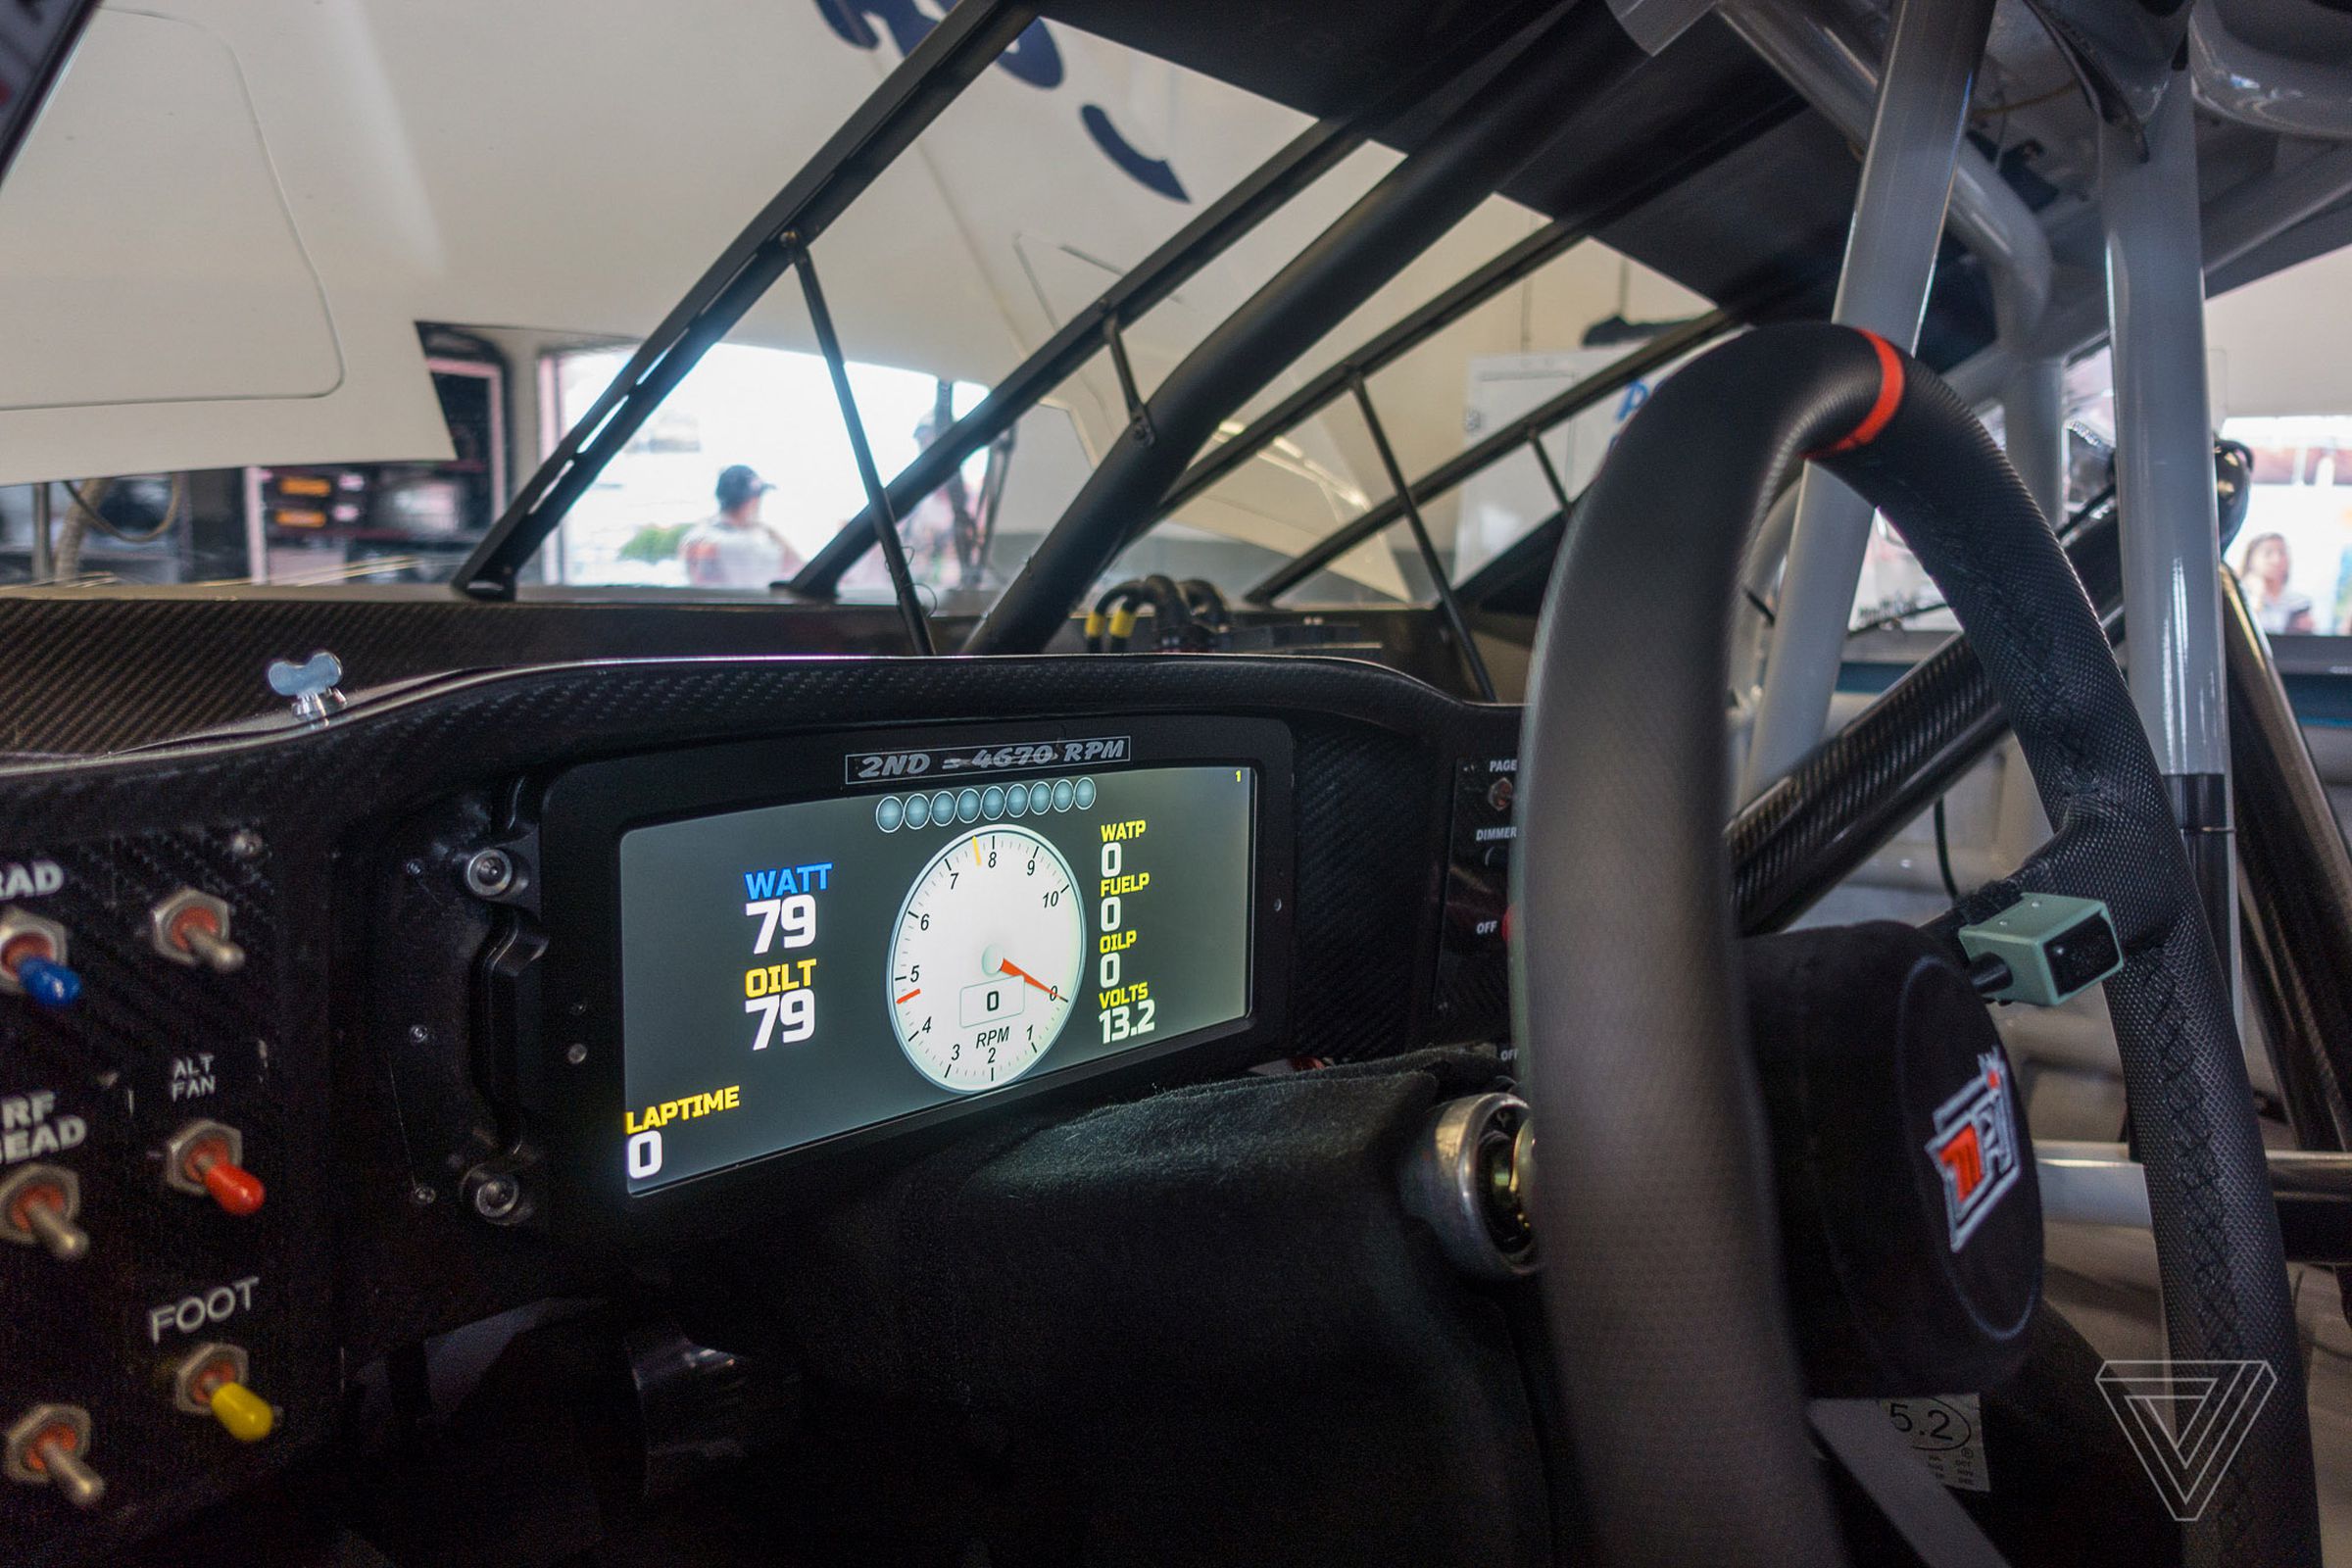 NASCAR’s new Race Management app (above) and the new digital dashboard (below) seen on the 37 car of Chris Buescher.